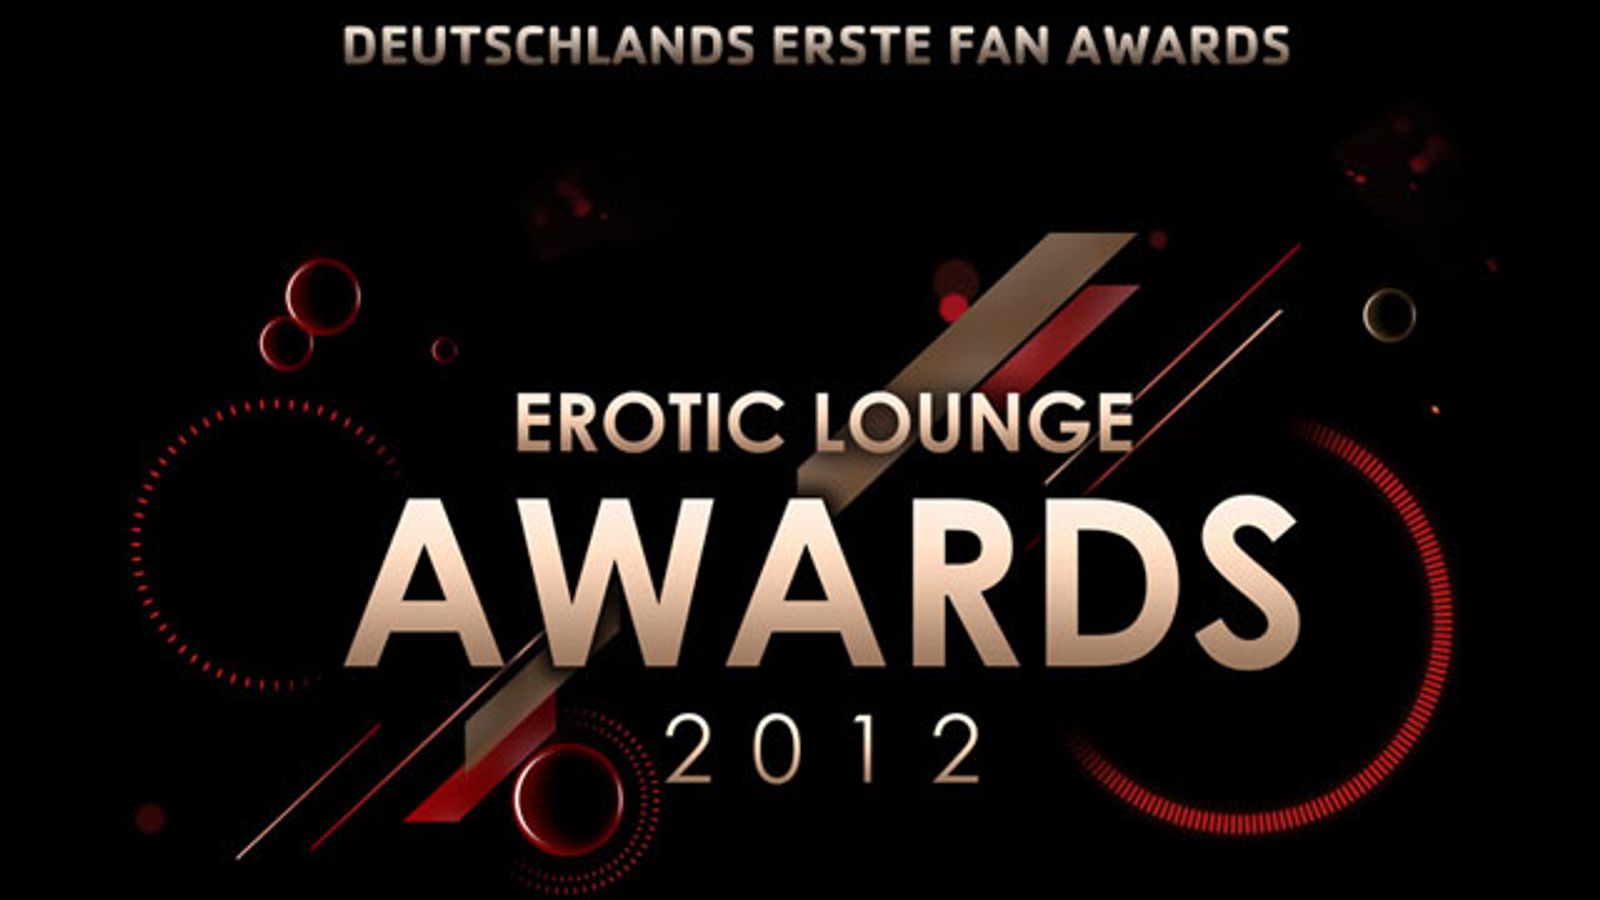 Erotic Lounge Awards 2012 Announces Winners